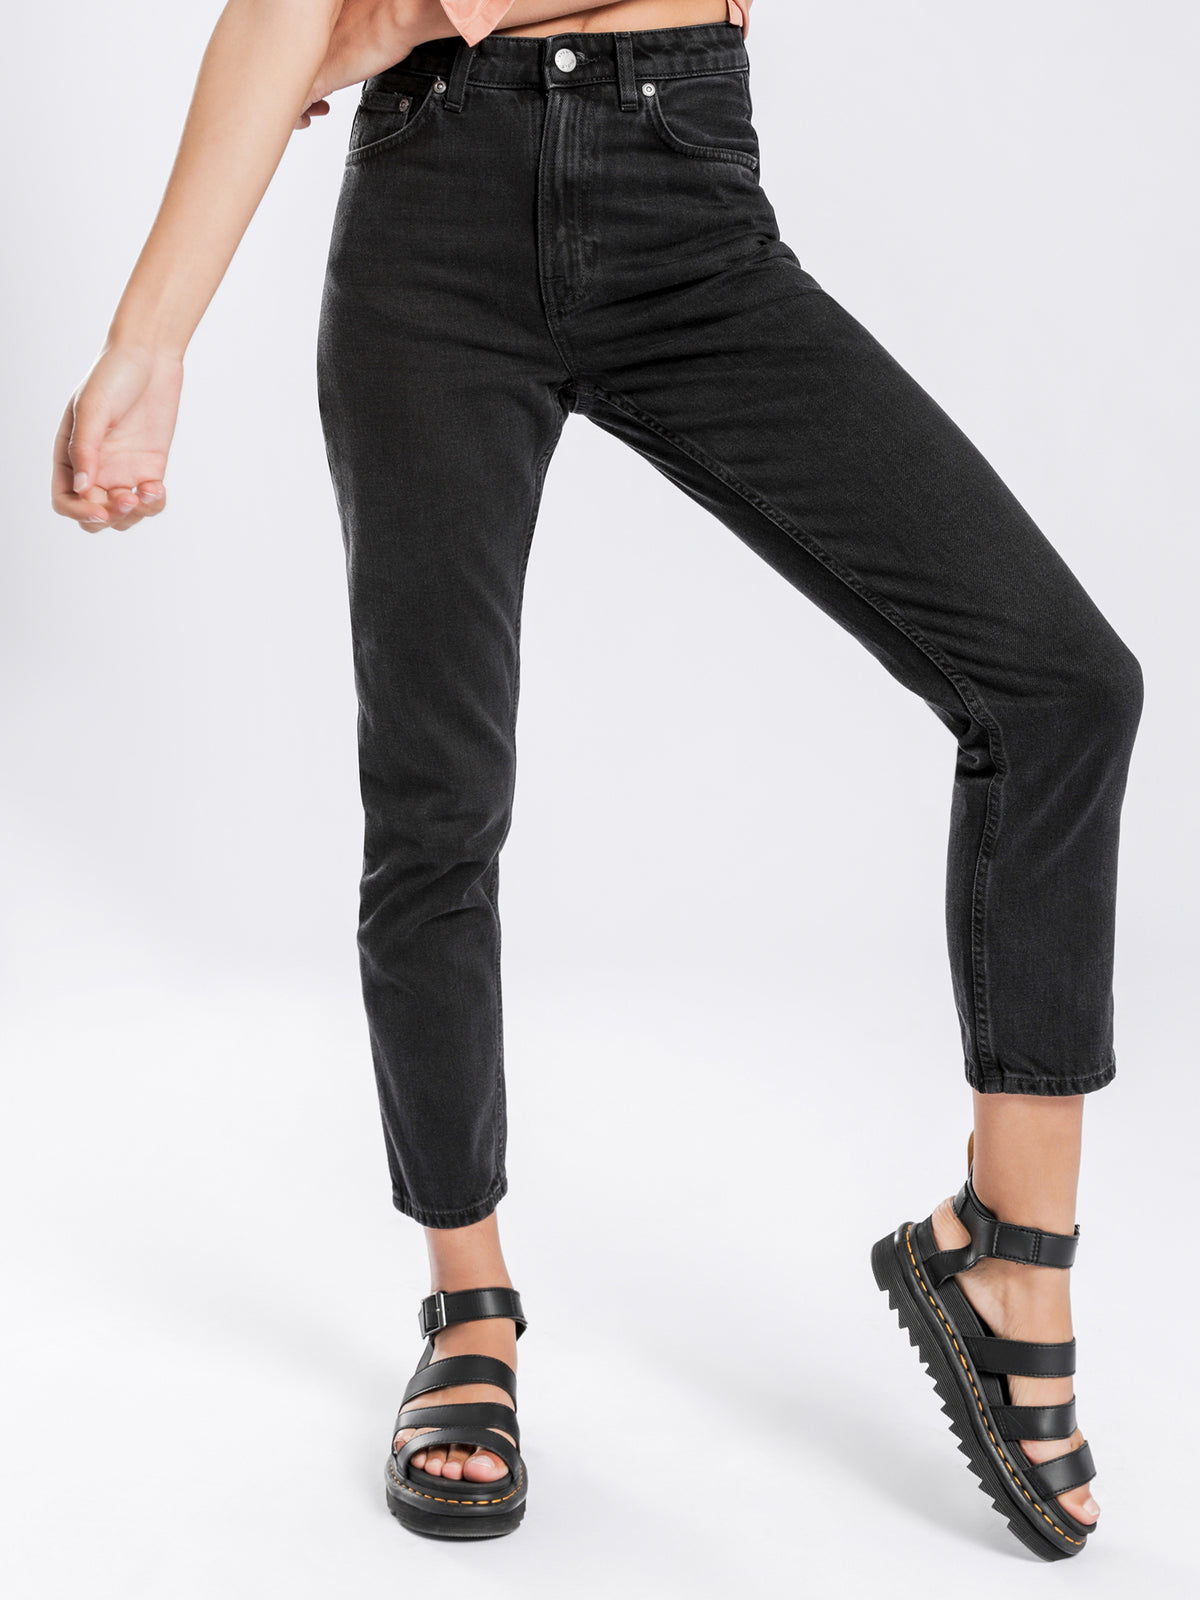 Breezy Britt Slim Jeans in Black Worn